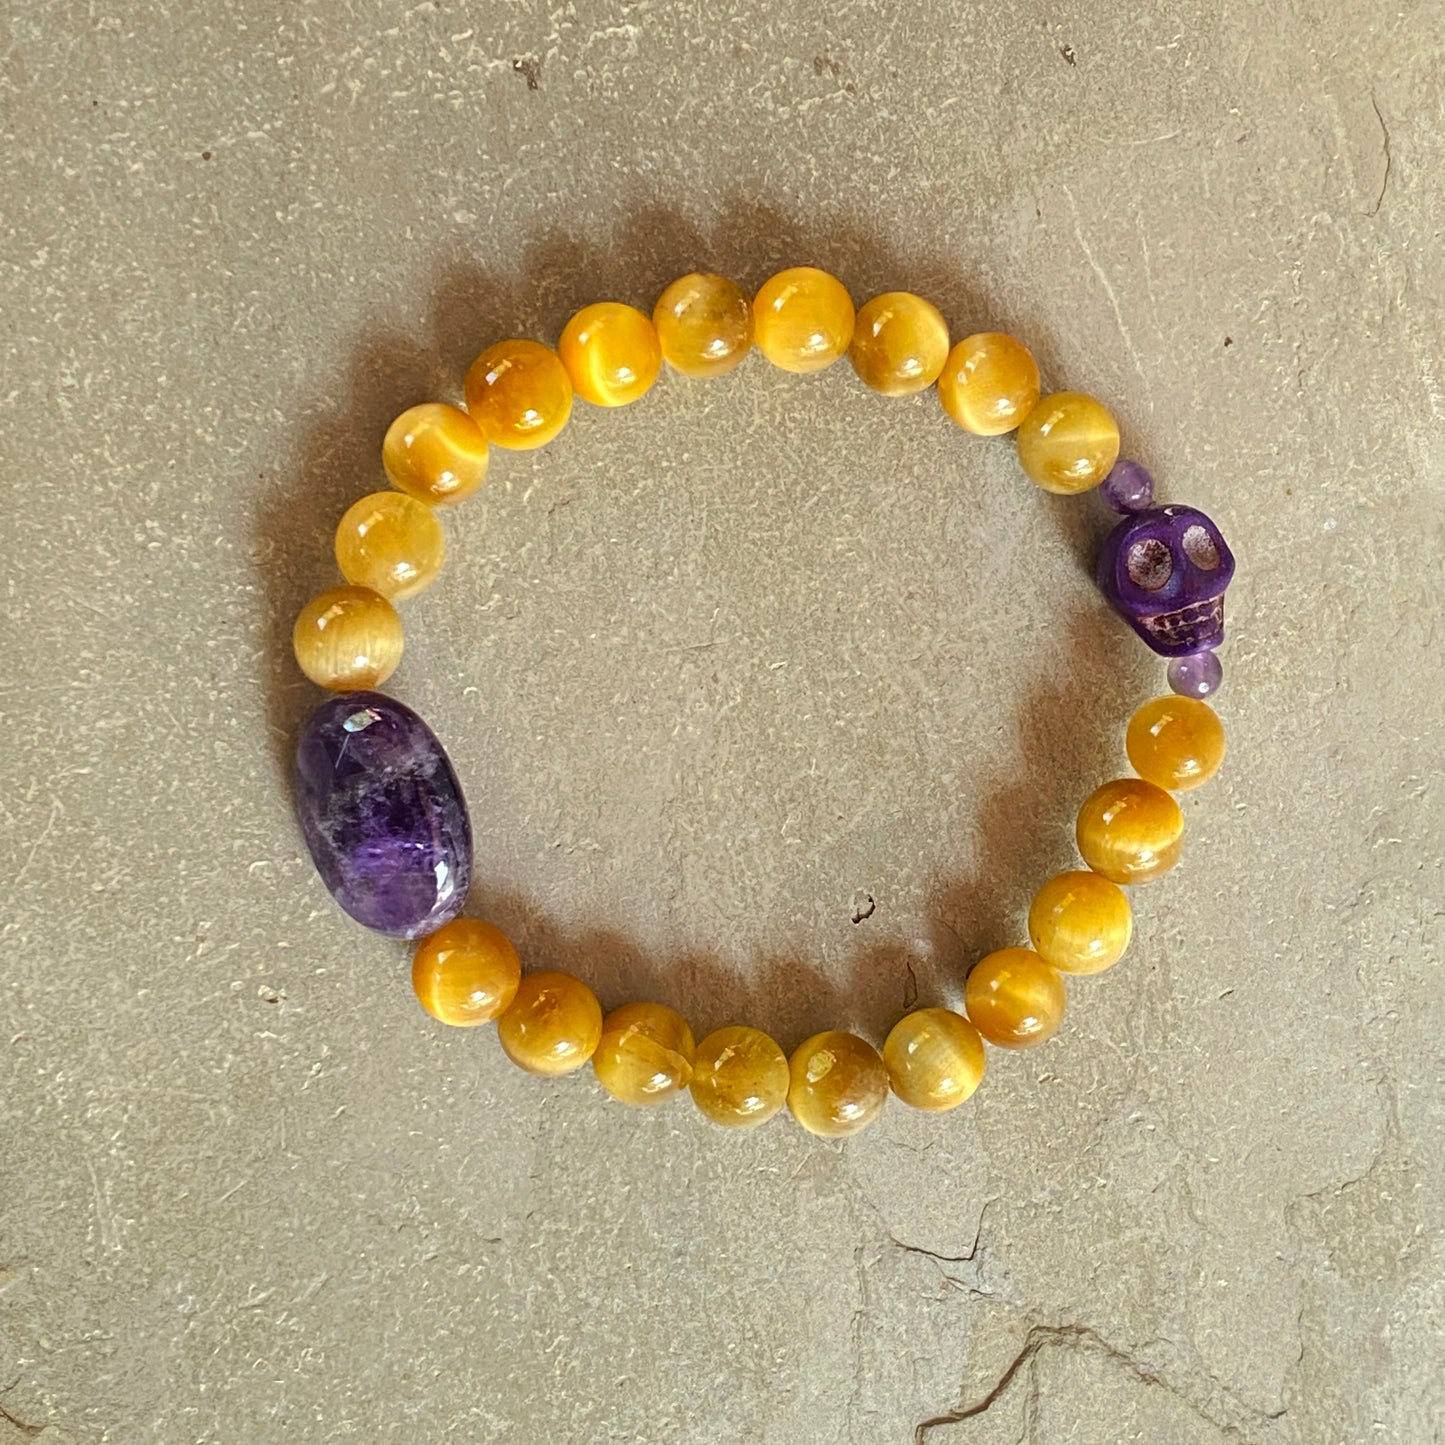 Men’s Golden TigerEye Gemstone Bracelet with Amethyst and Purple Skull stretch bracelet